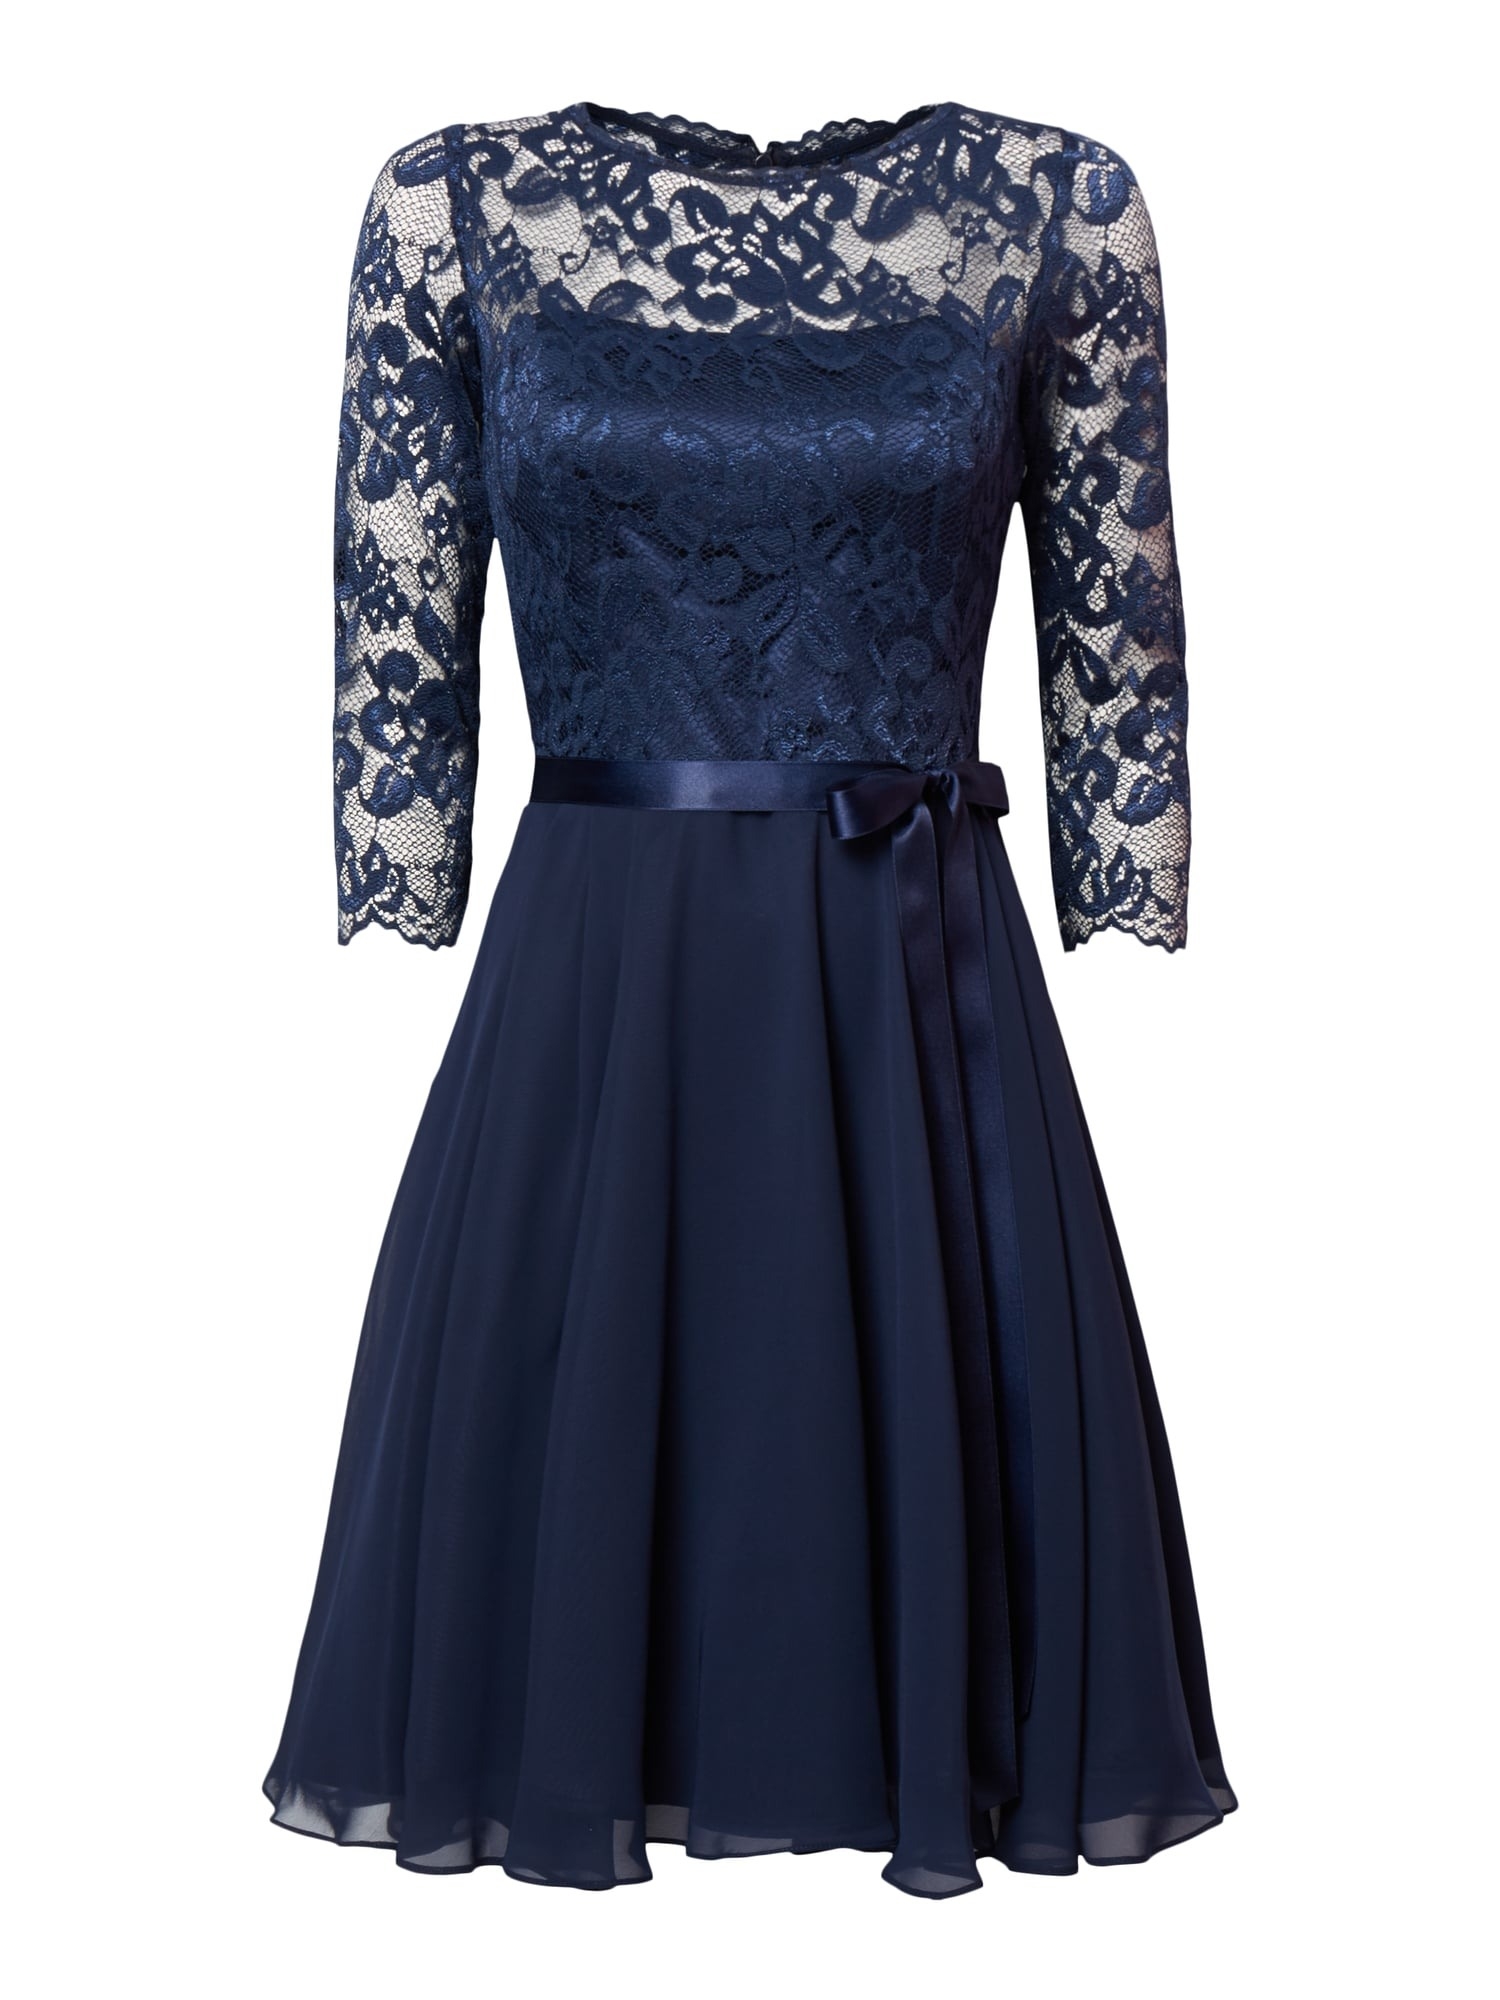 10 Leicht Kleid Blau Spitze Spezialgebiet20 Genial Kleid Blau Spitze Vertrieb